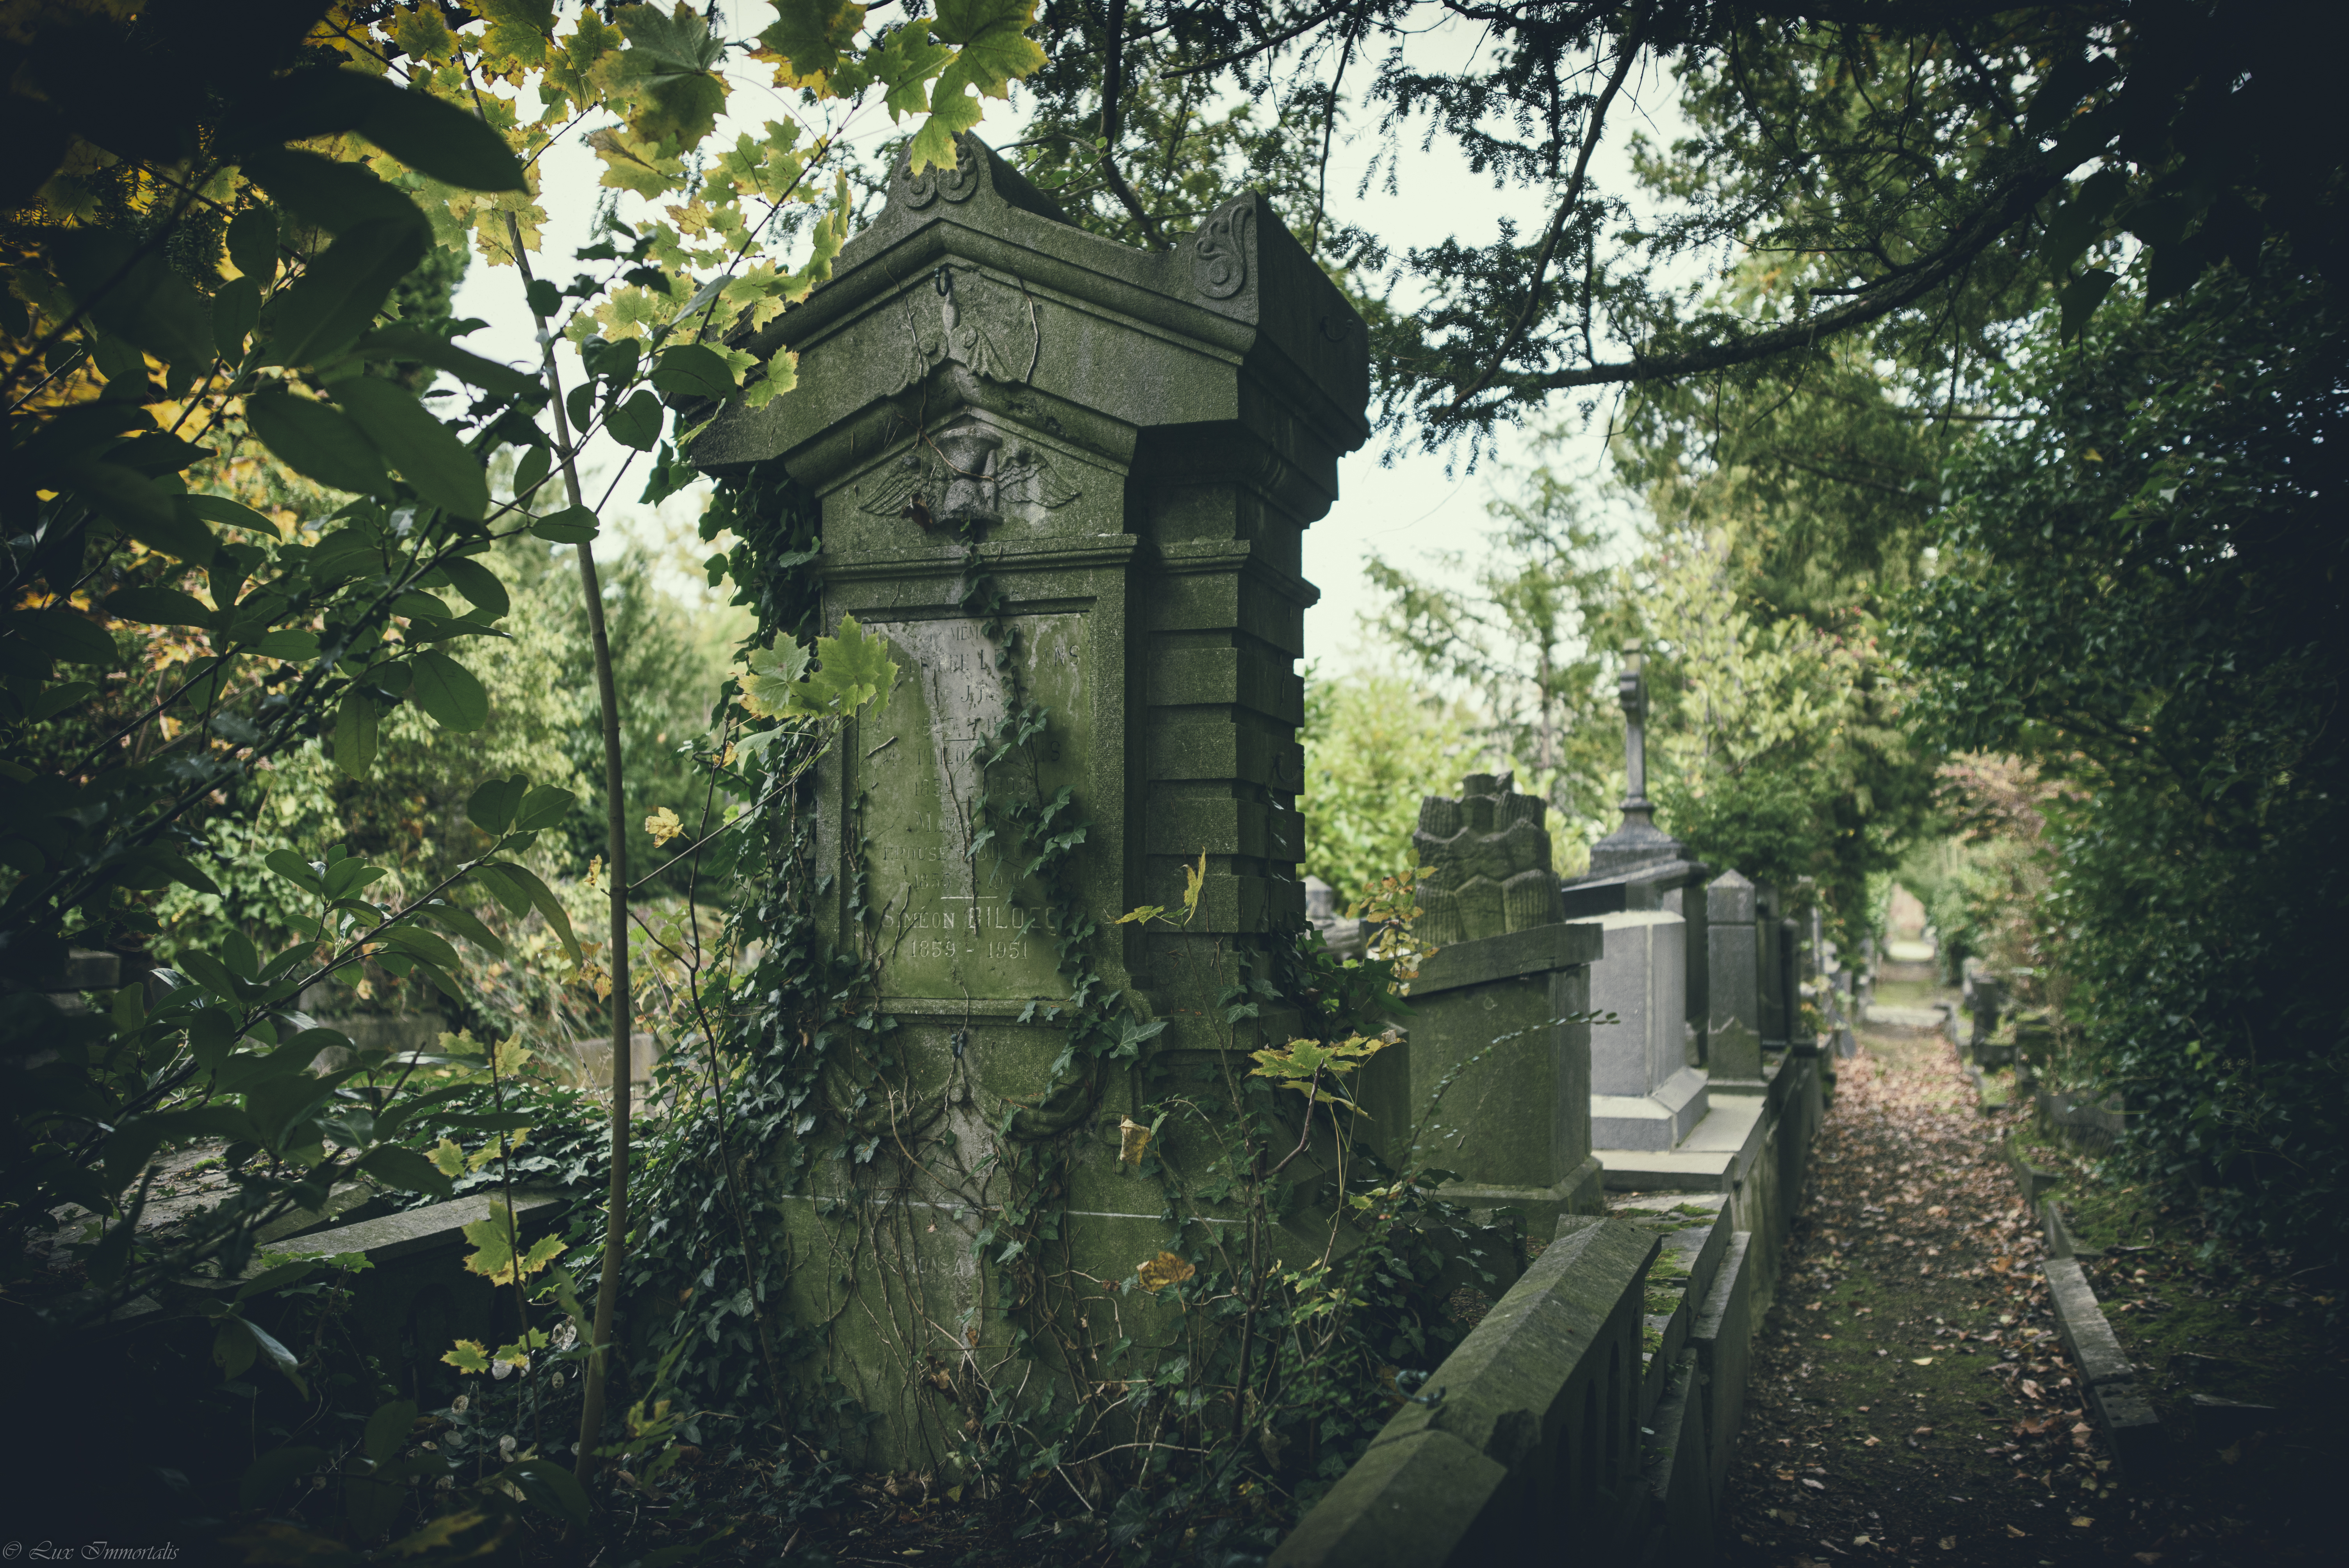 General 6016x4016 tempus fugit cemetery urban decay nature plants tombstones graveyards grave